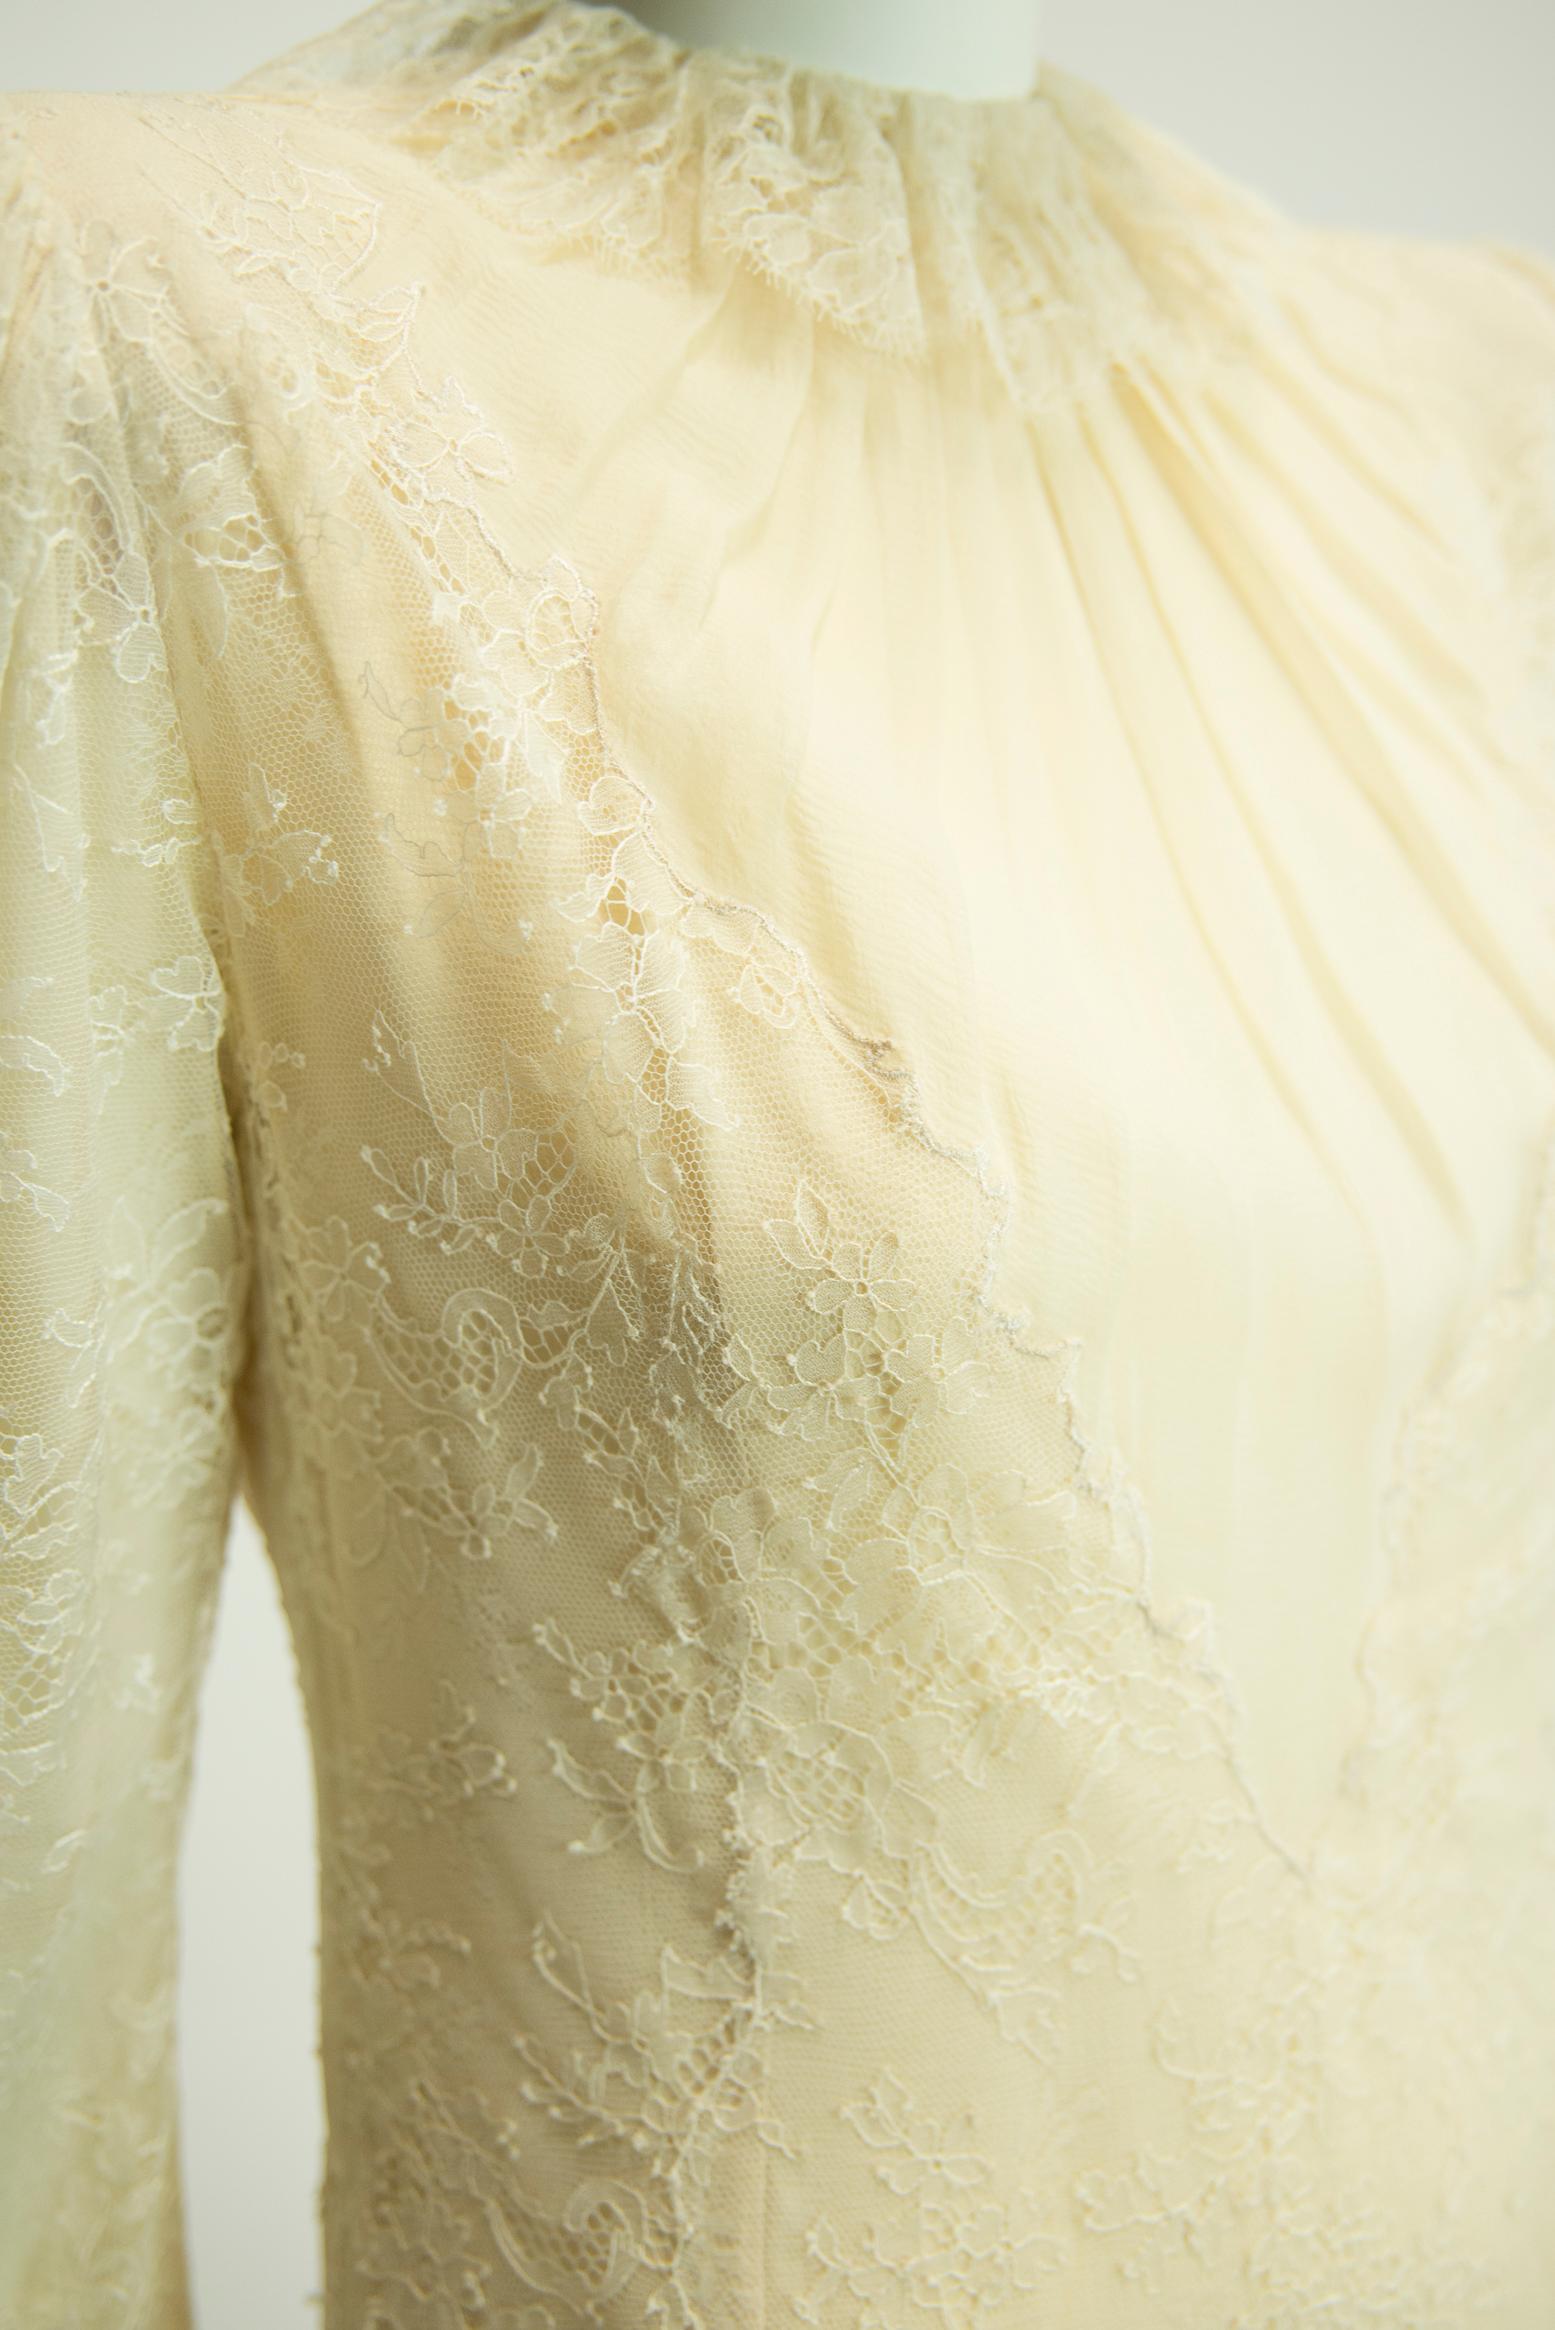 Exquisite Jean Louis Scherrer Couture Silk Chiffon & Lace-Trimmed Dress For Sale 10